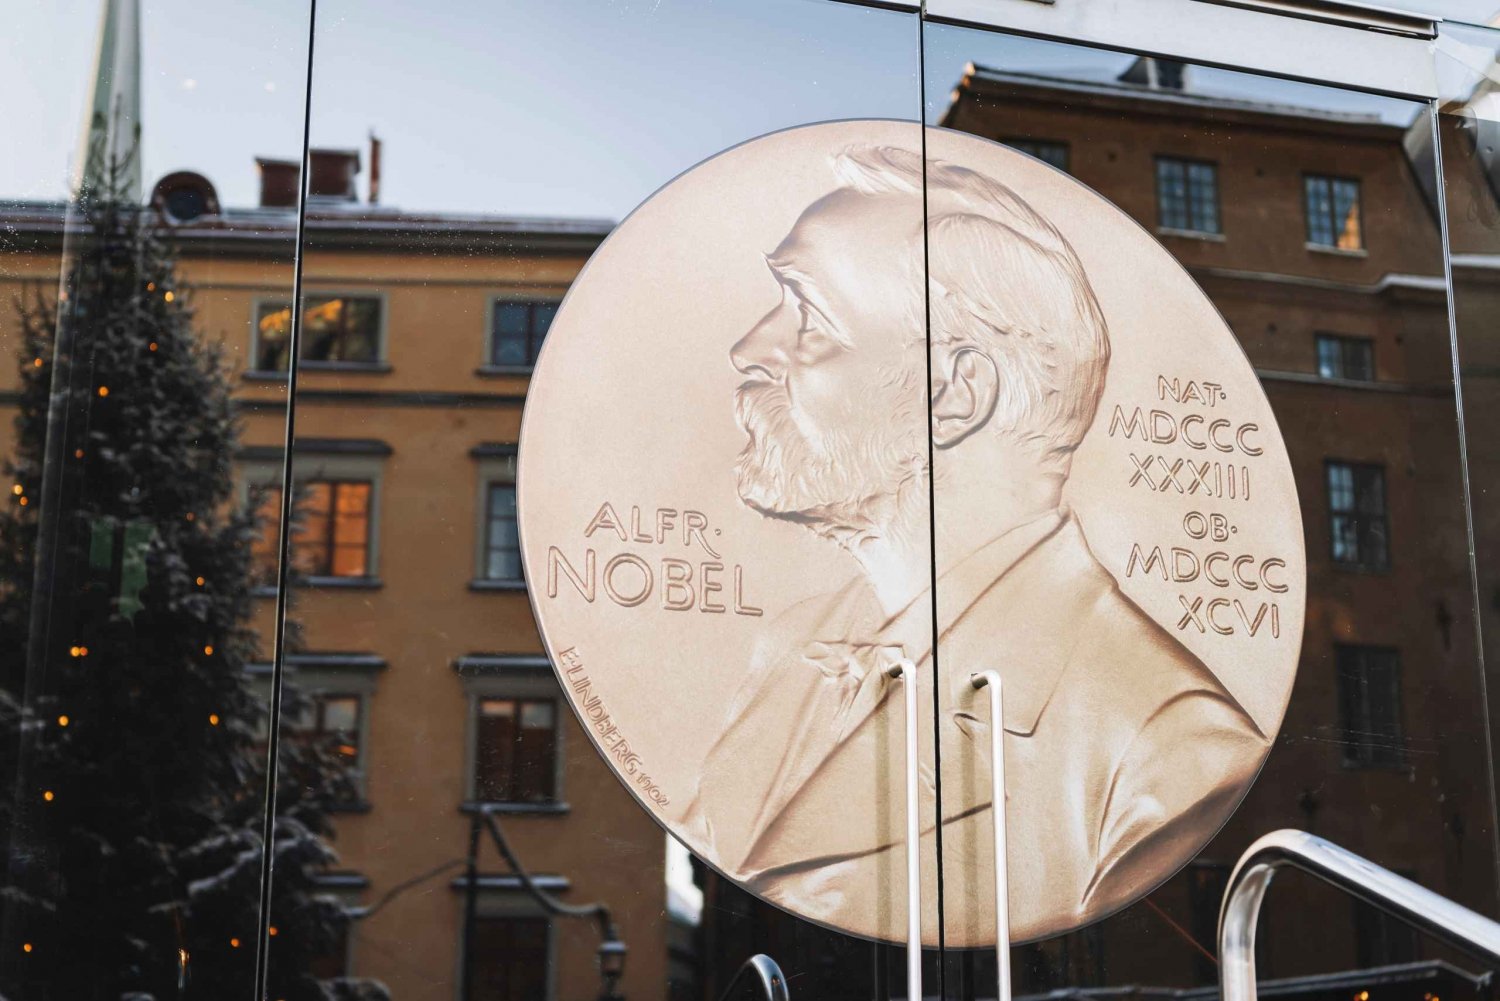 Stockholm: Nobel Prize Museum and Exhibition Entrébiljett